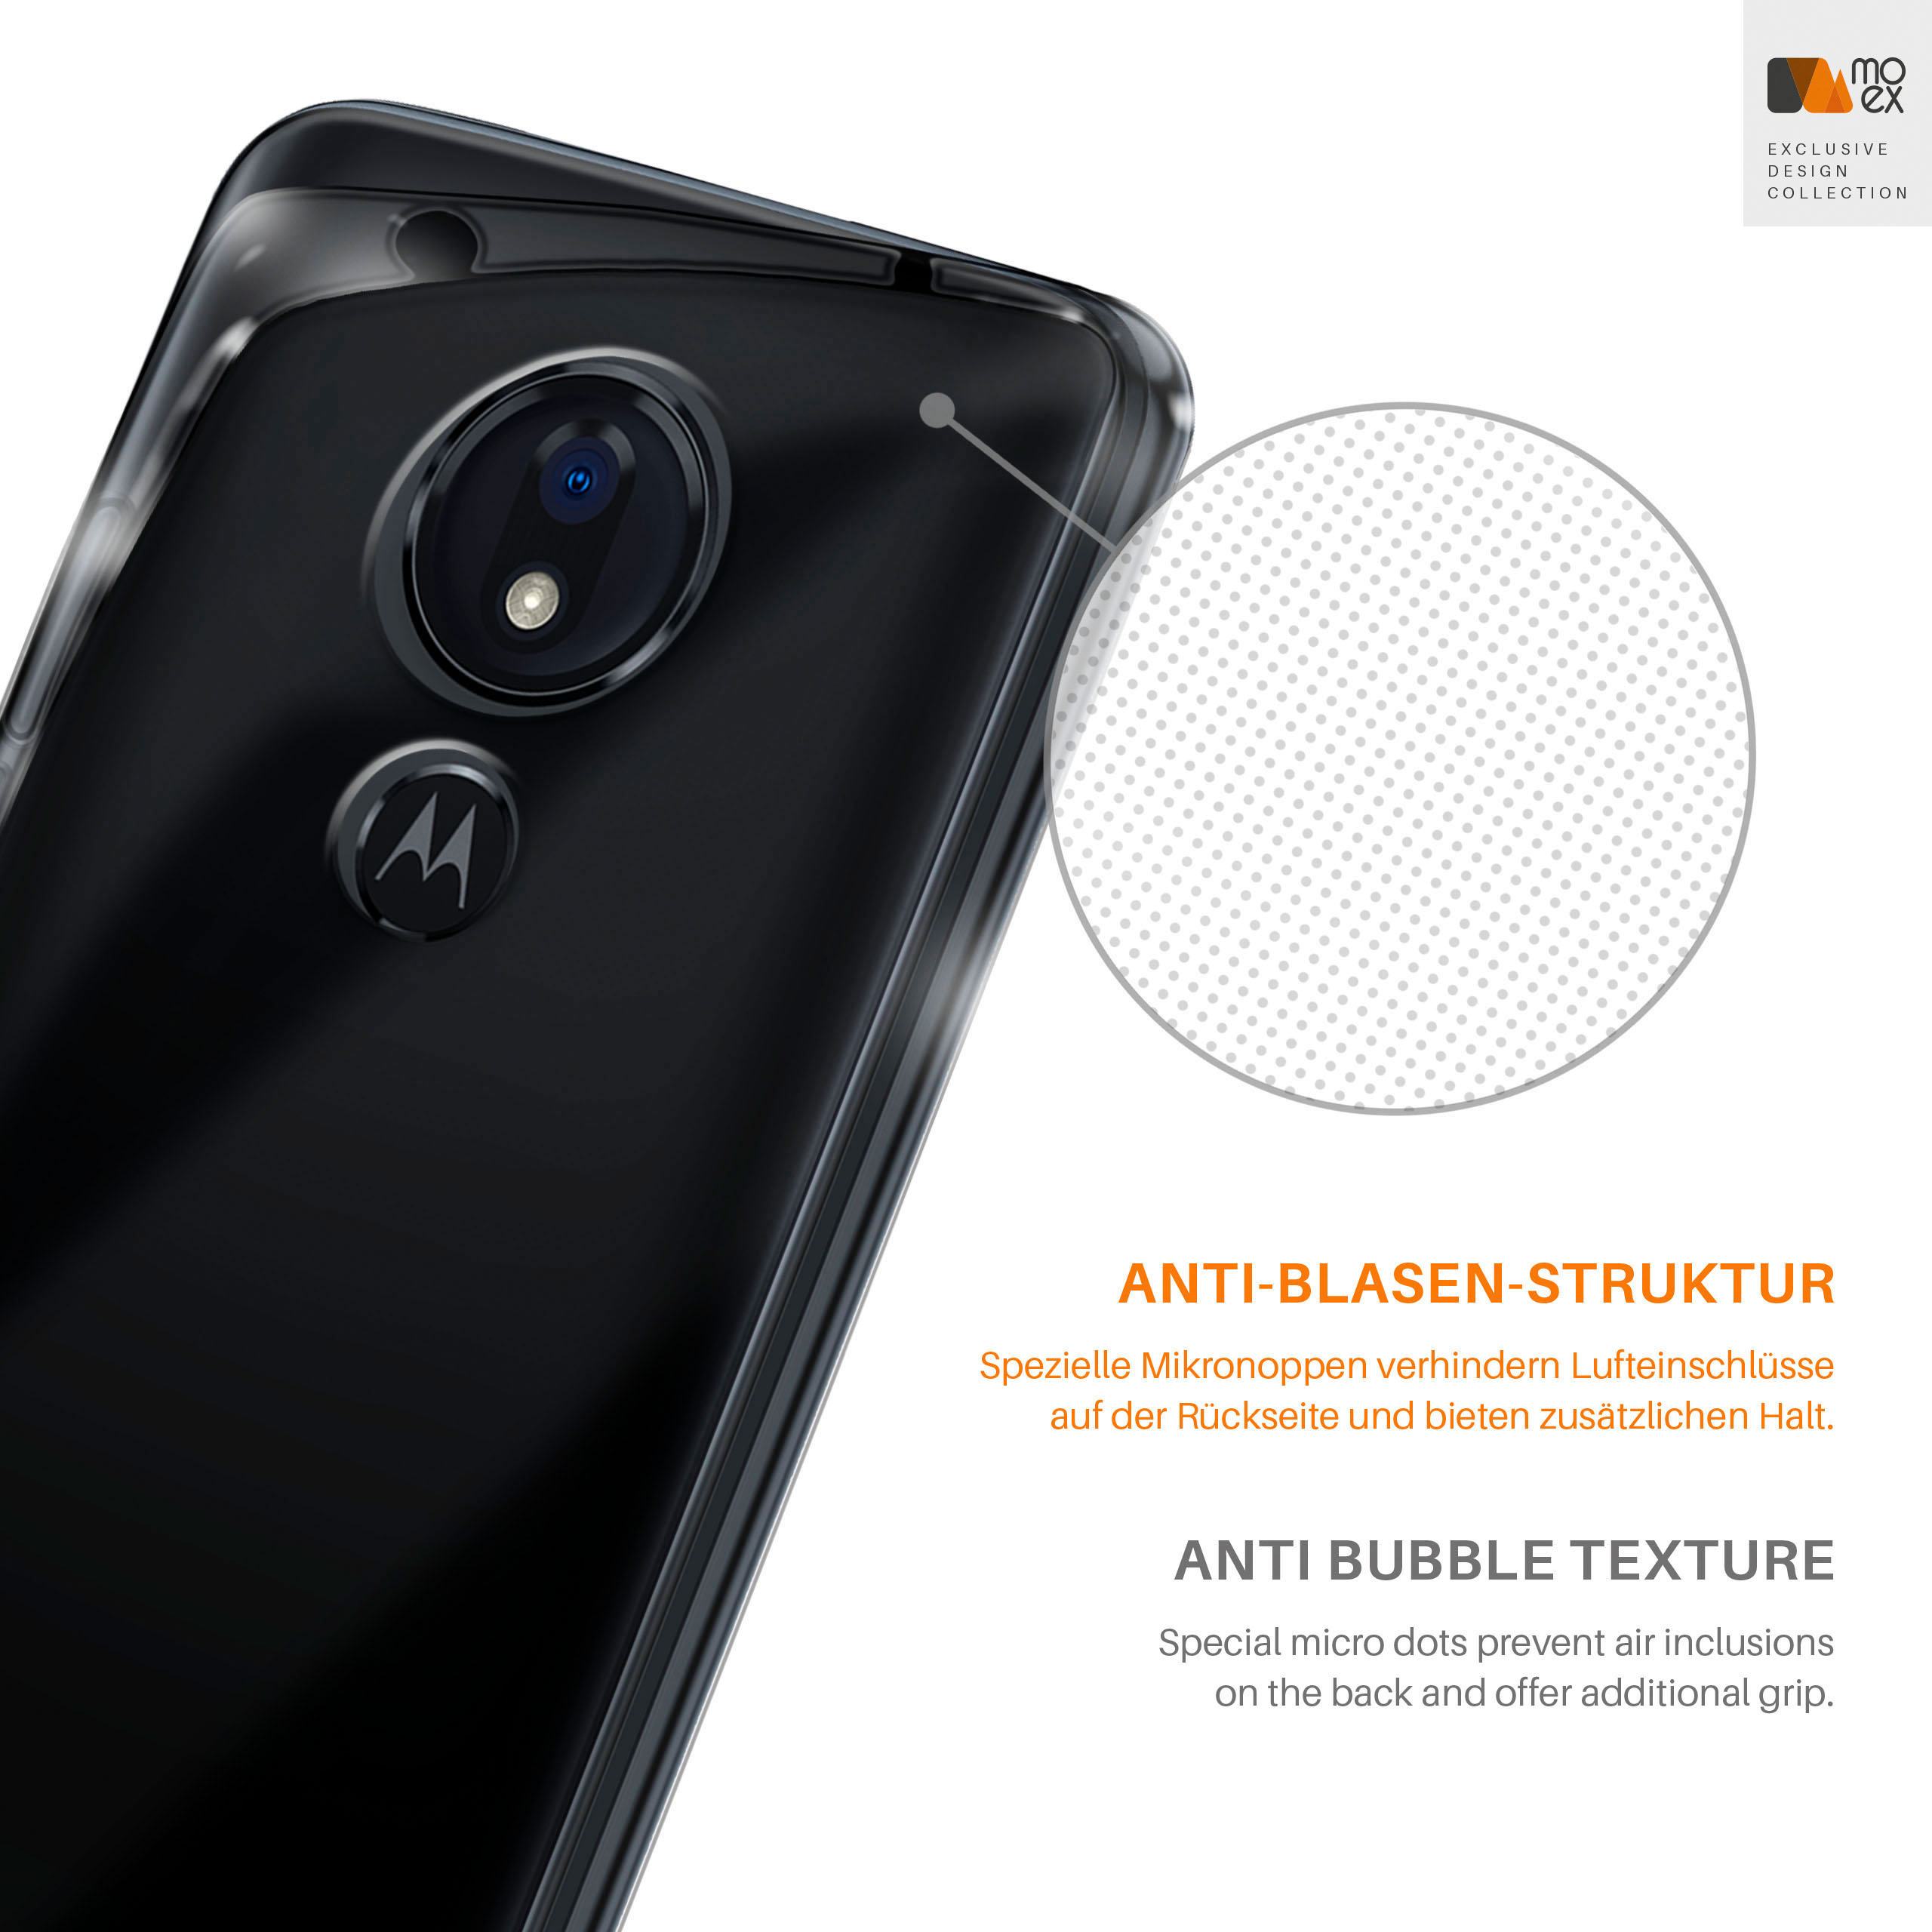 Backcover, Motorola, Moto G7 Crystal-Clear Case, MOEX Aero Play,